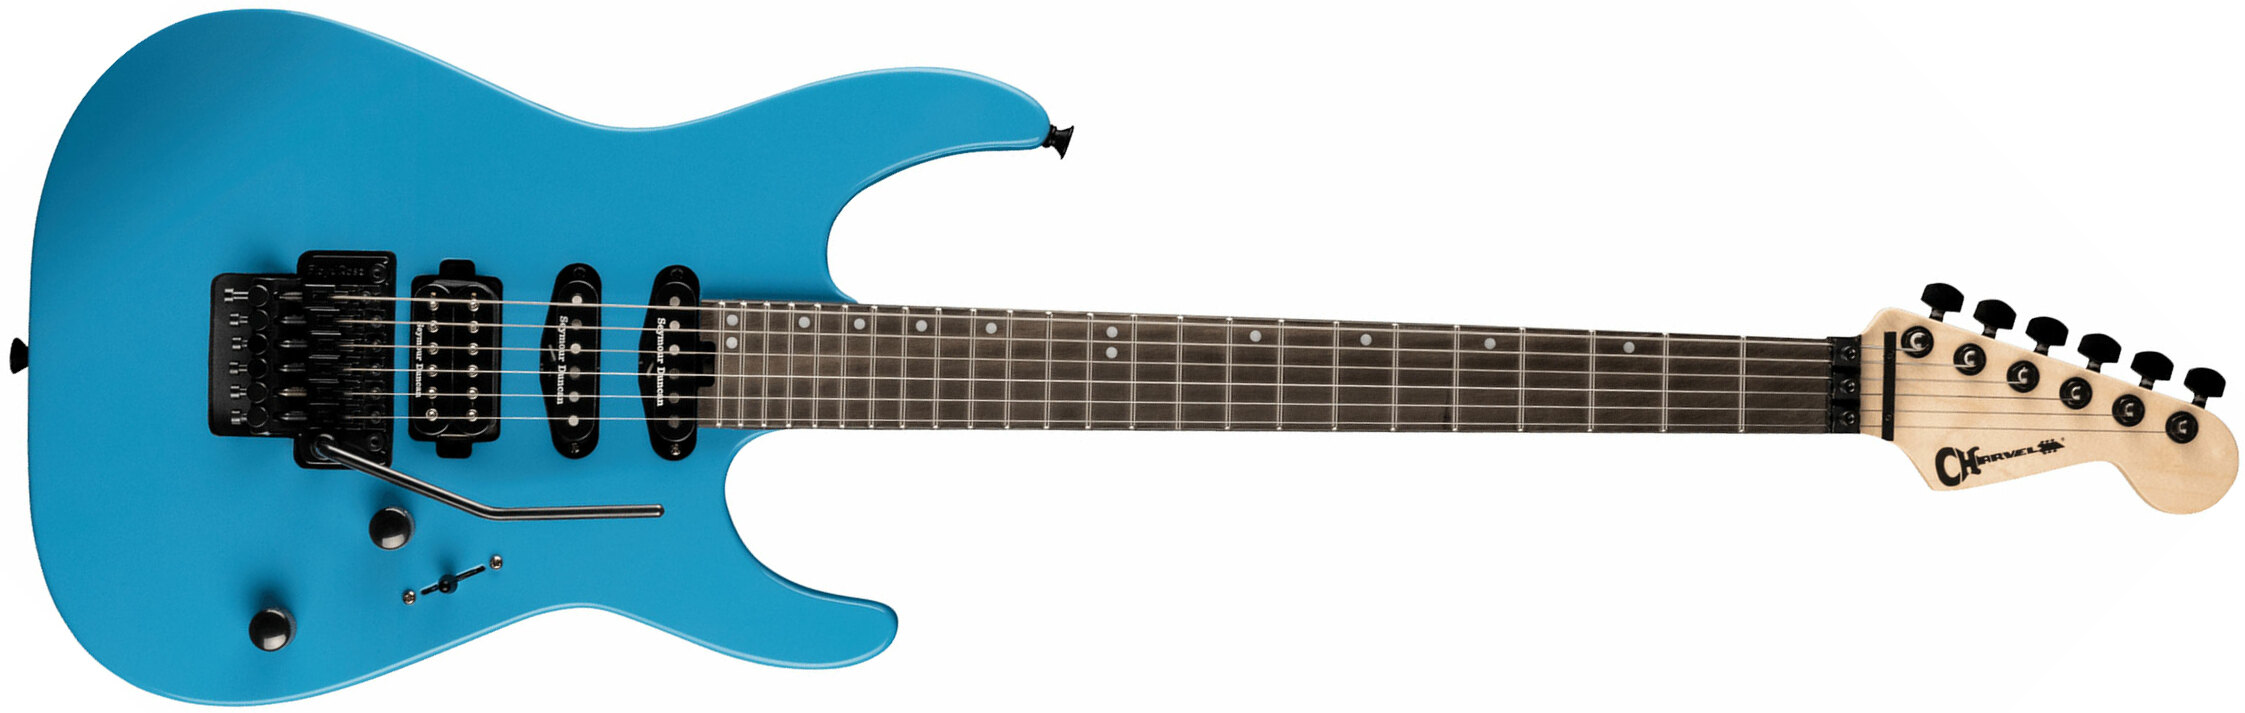 Charvel Dinky Dk24 Hss Fr E Pro-mod Seymour Duncan Eb - Infinity Blue - Str shape electric guitar - Main picture